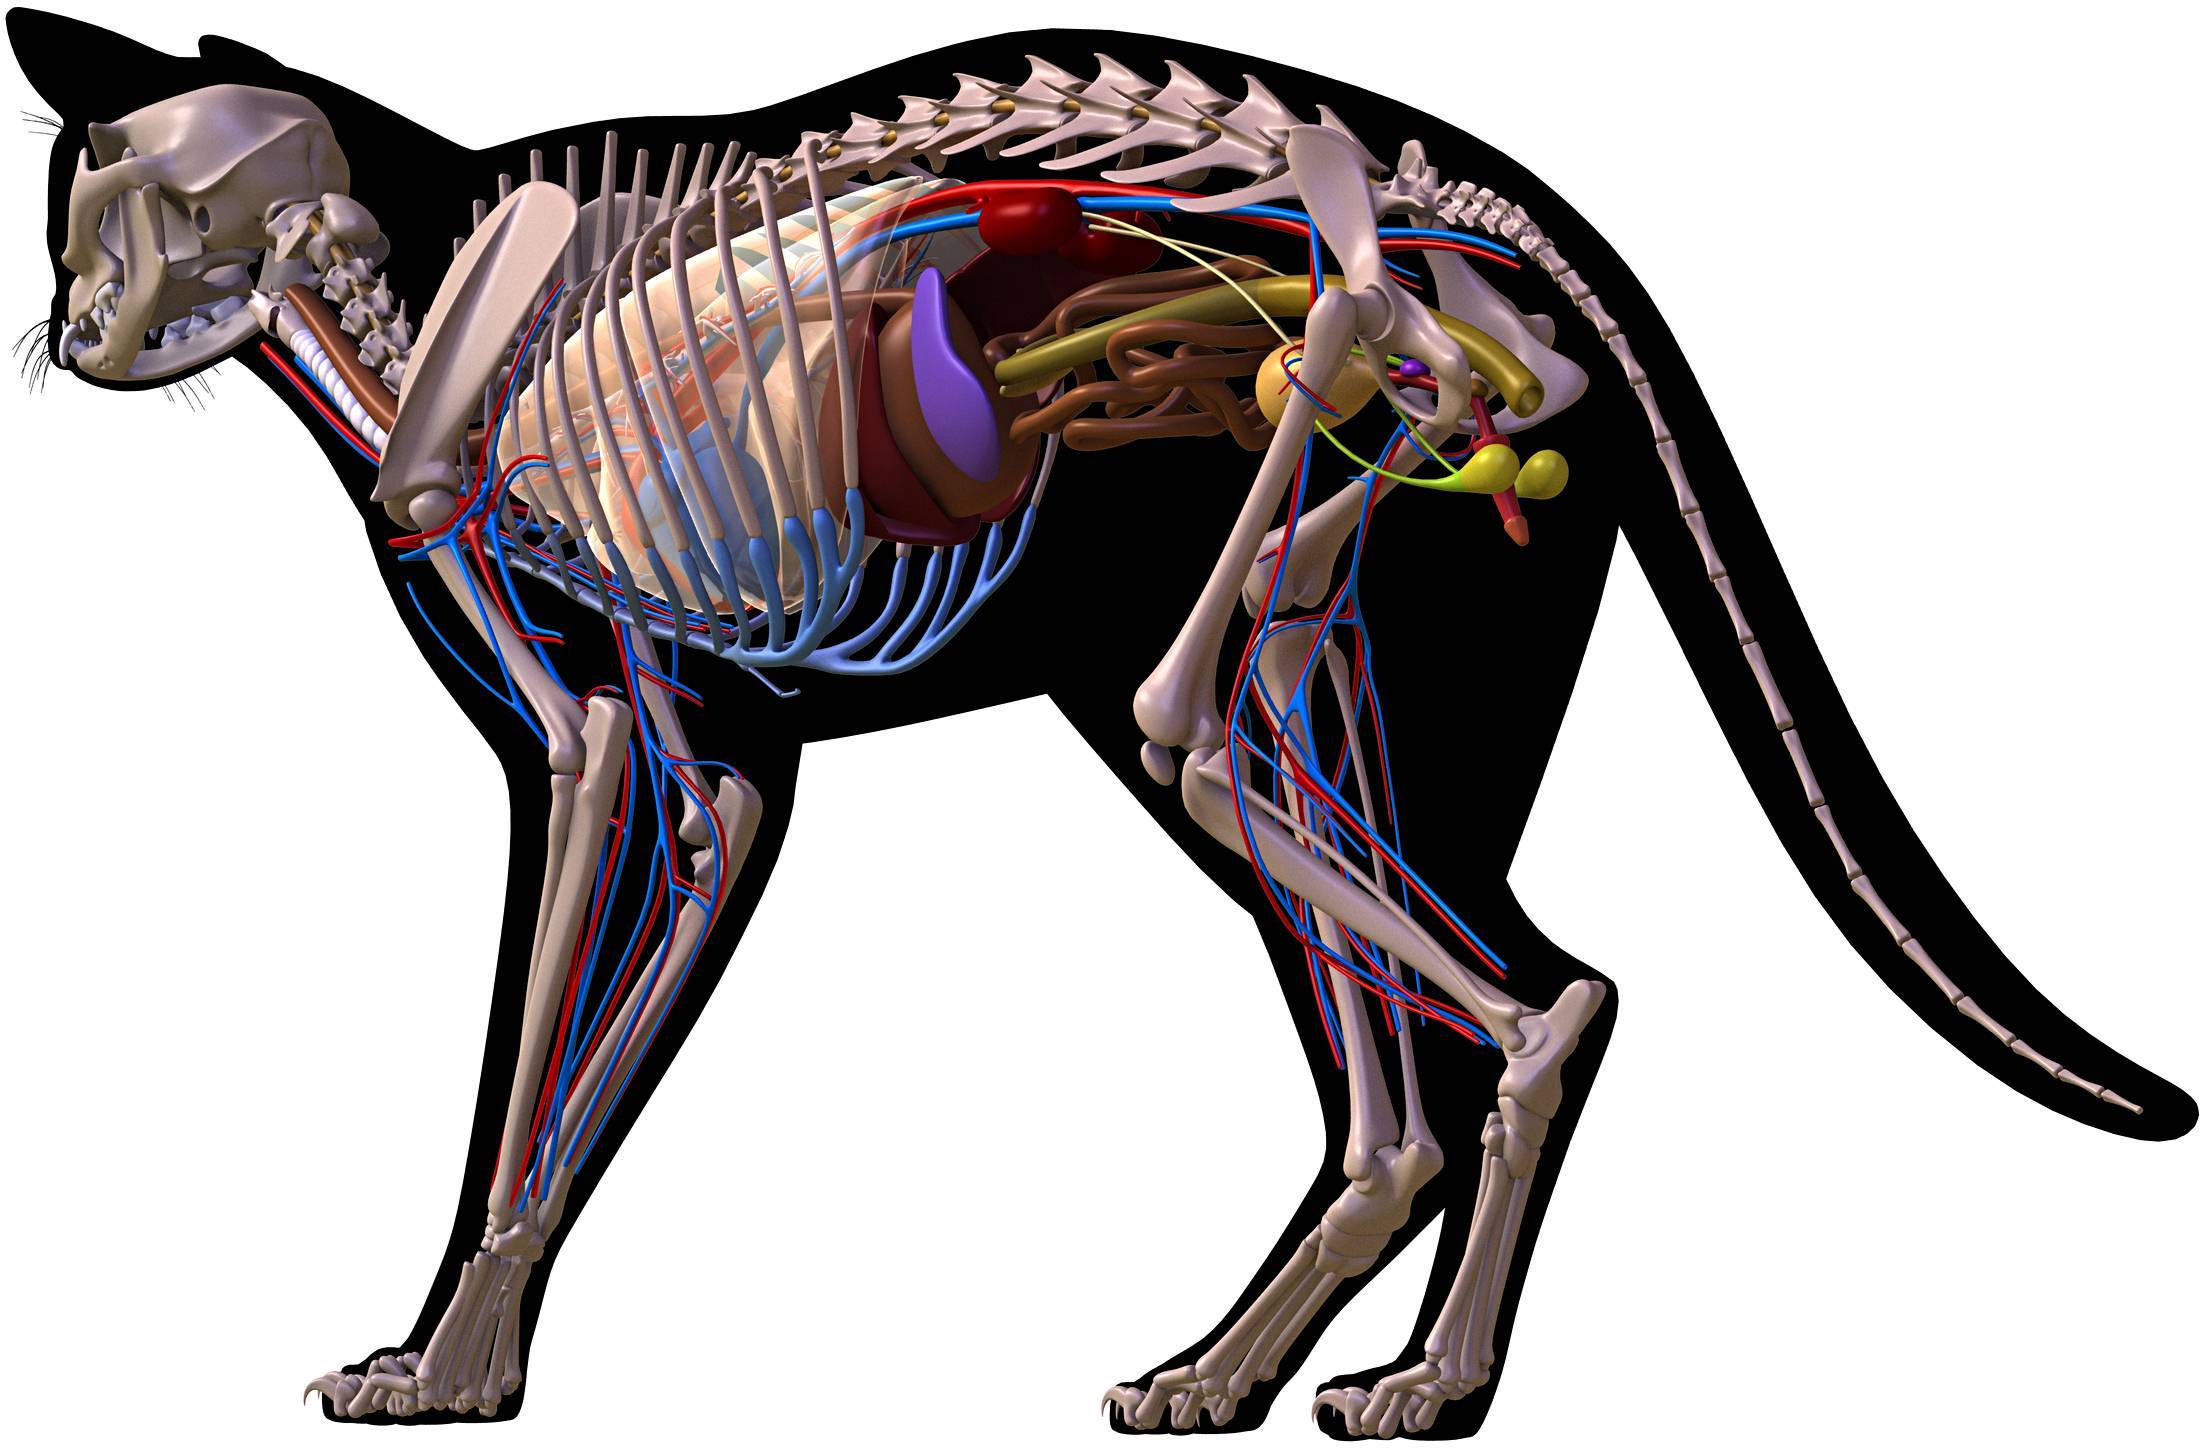 System animal. Анатомия кота. Анатомия кошки нервная система. Строение кошки анатомия скелет. Анатомия кошки сфинкса.